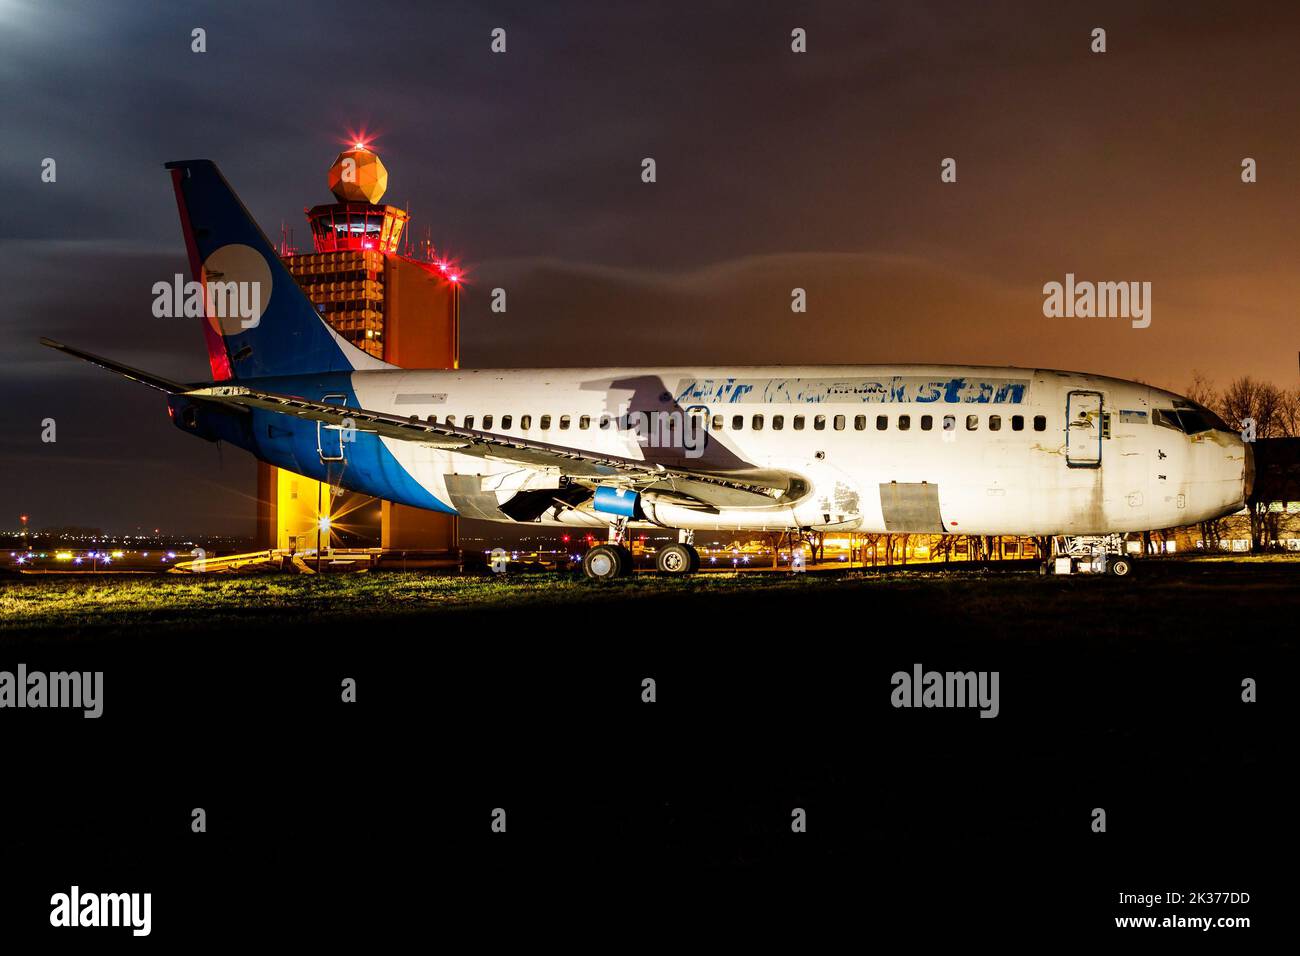 Budapest, Hungary - December 6, 2017: Air Kazakhstan passenger plane at airport. Schedule flight travel. Aviation and aircraft. Air transport. Global Stock Photo